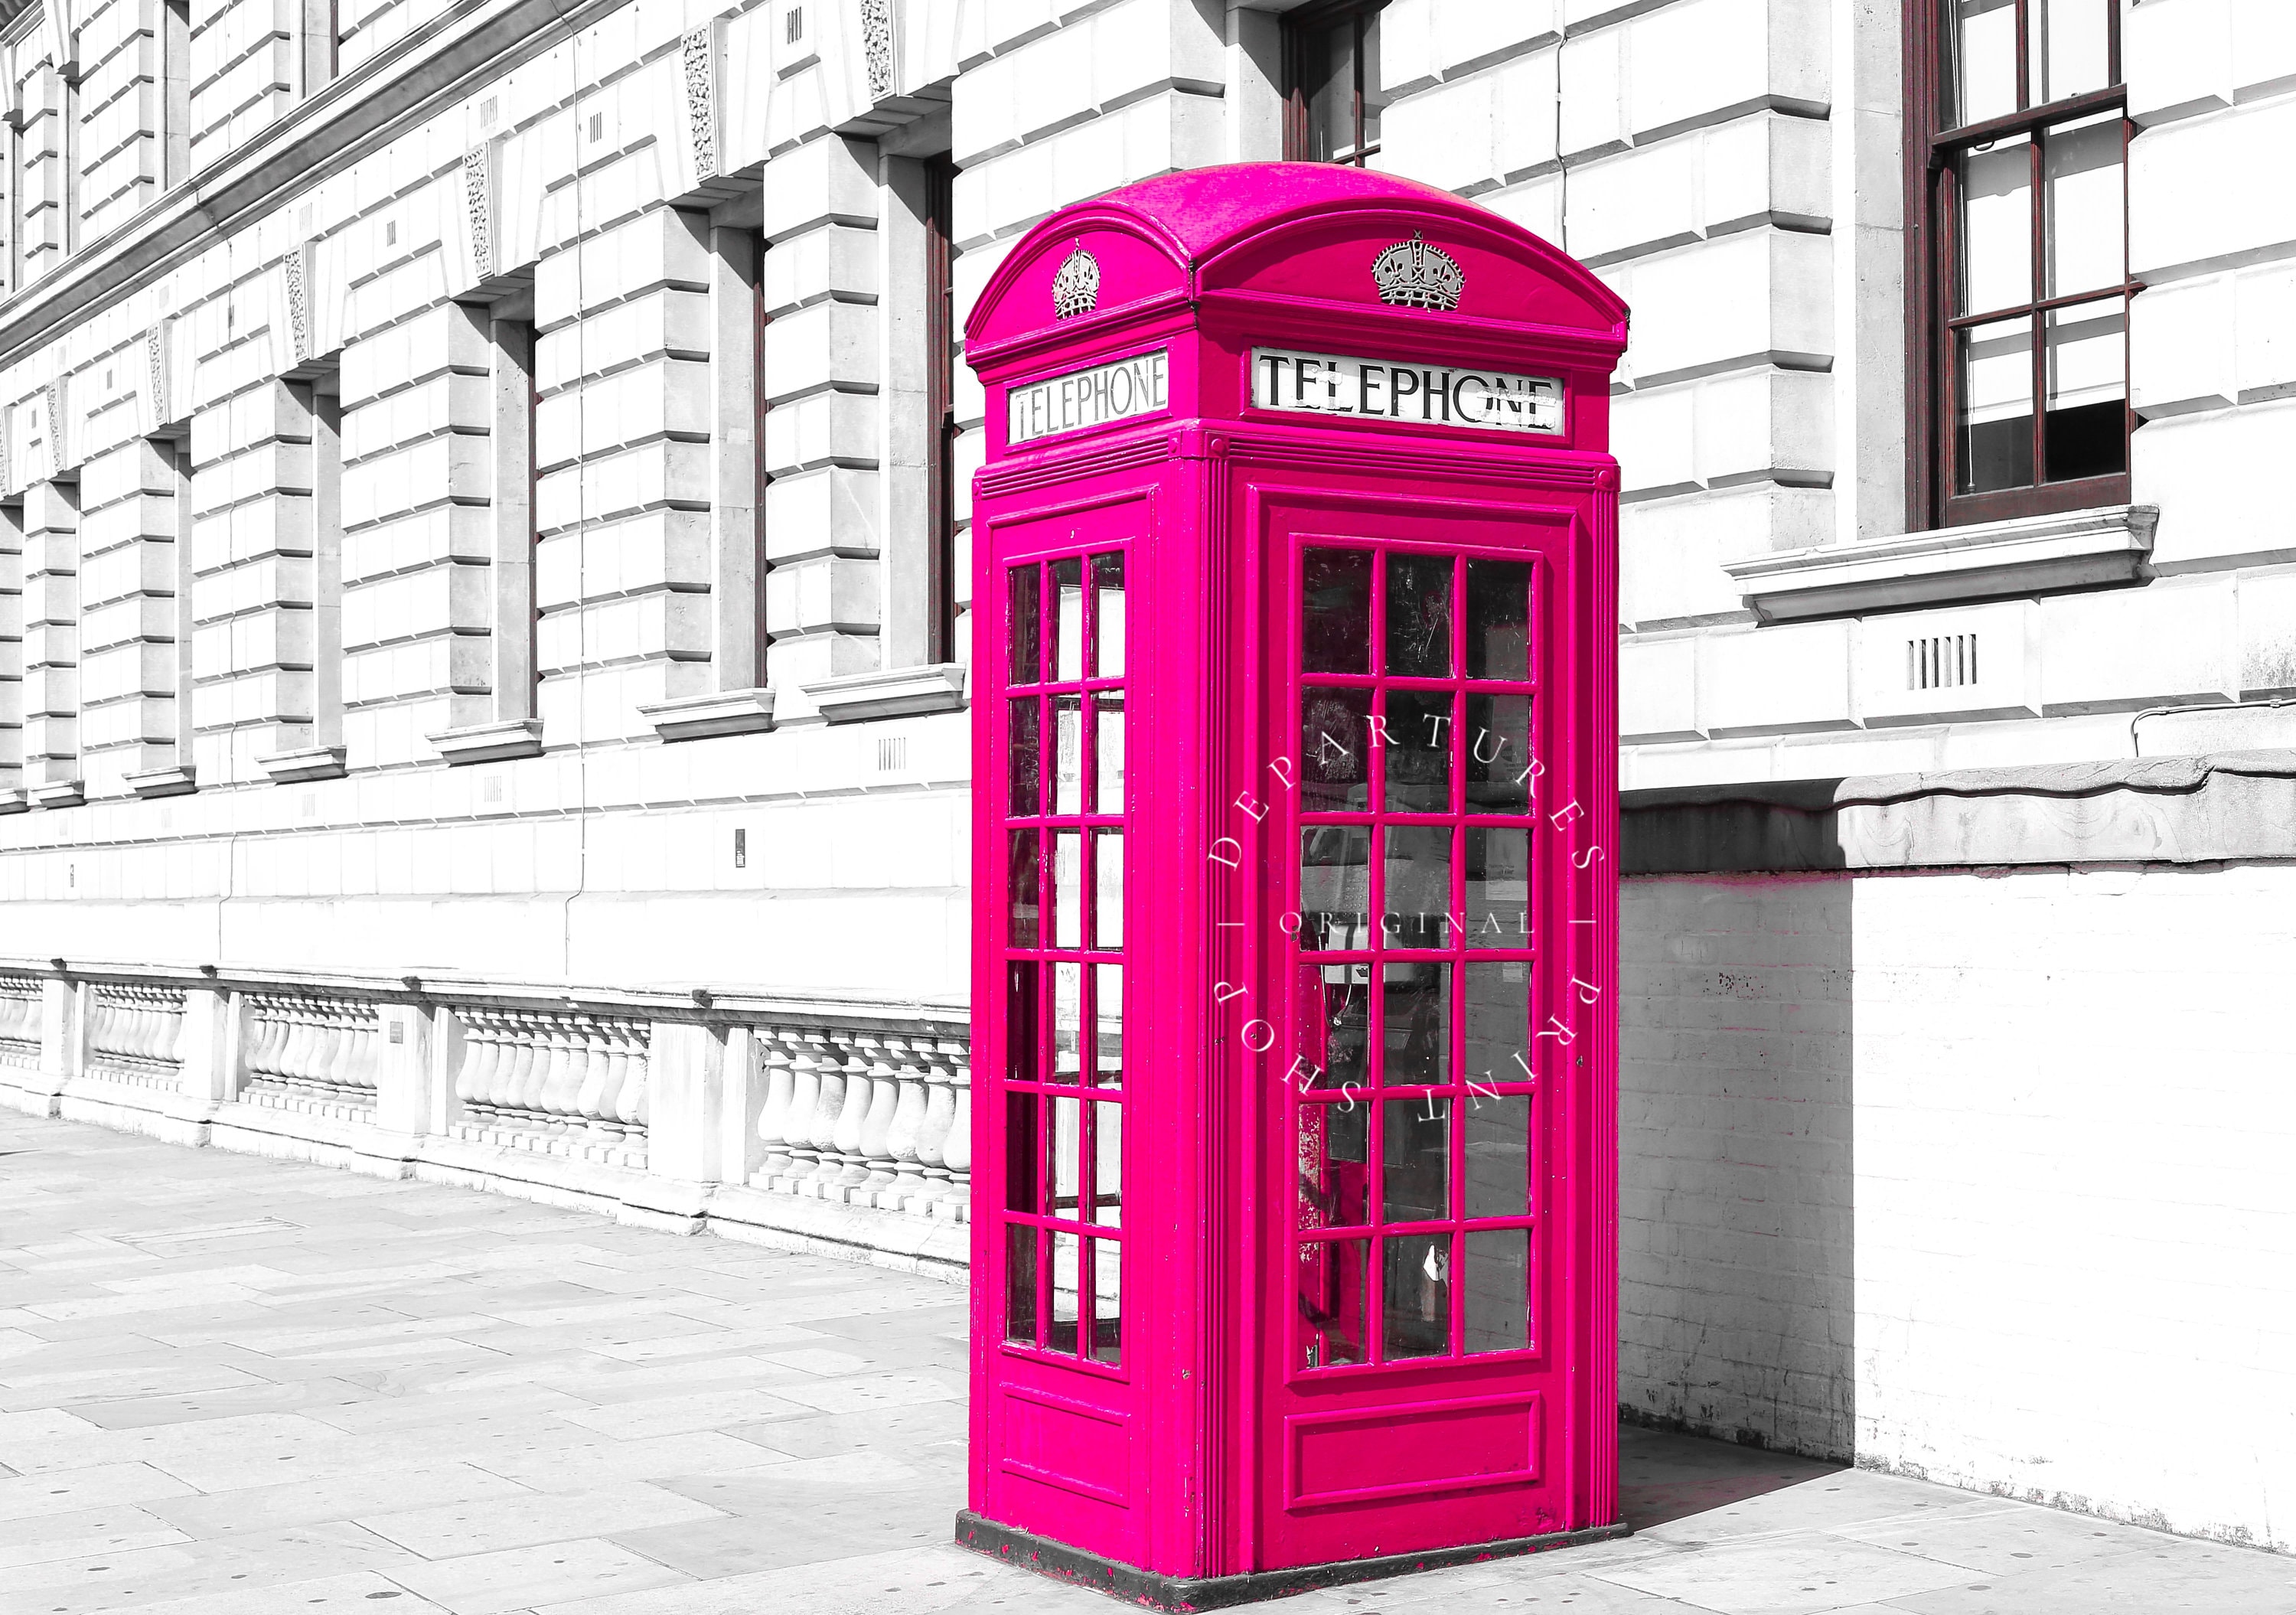 London Phone Box Pink Wall Art Pink Telephone Booth London 